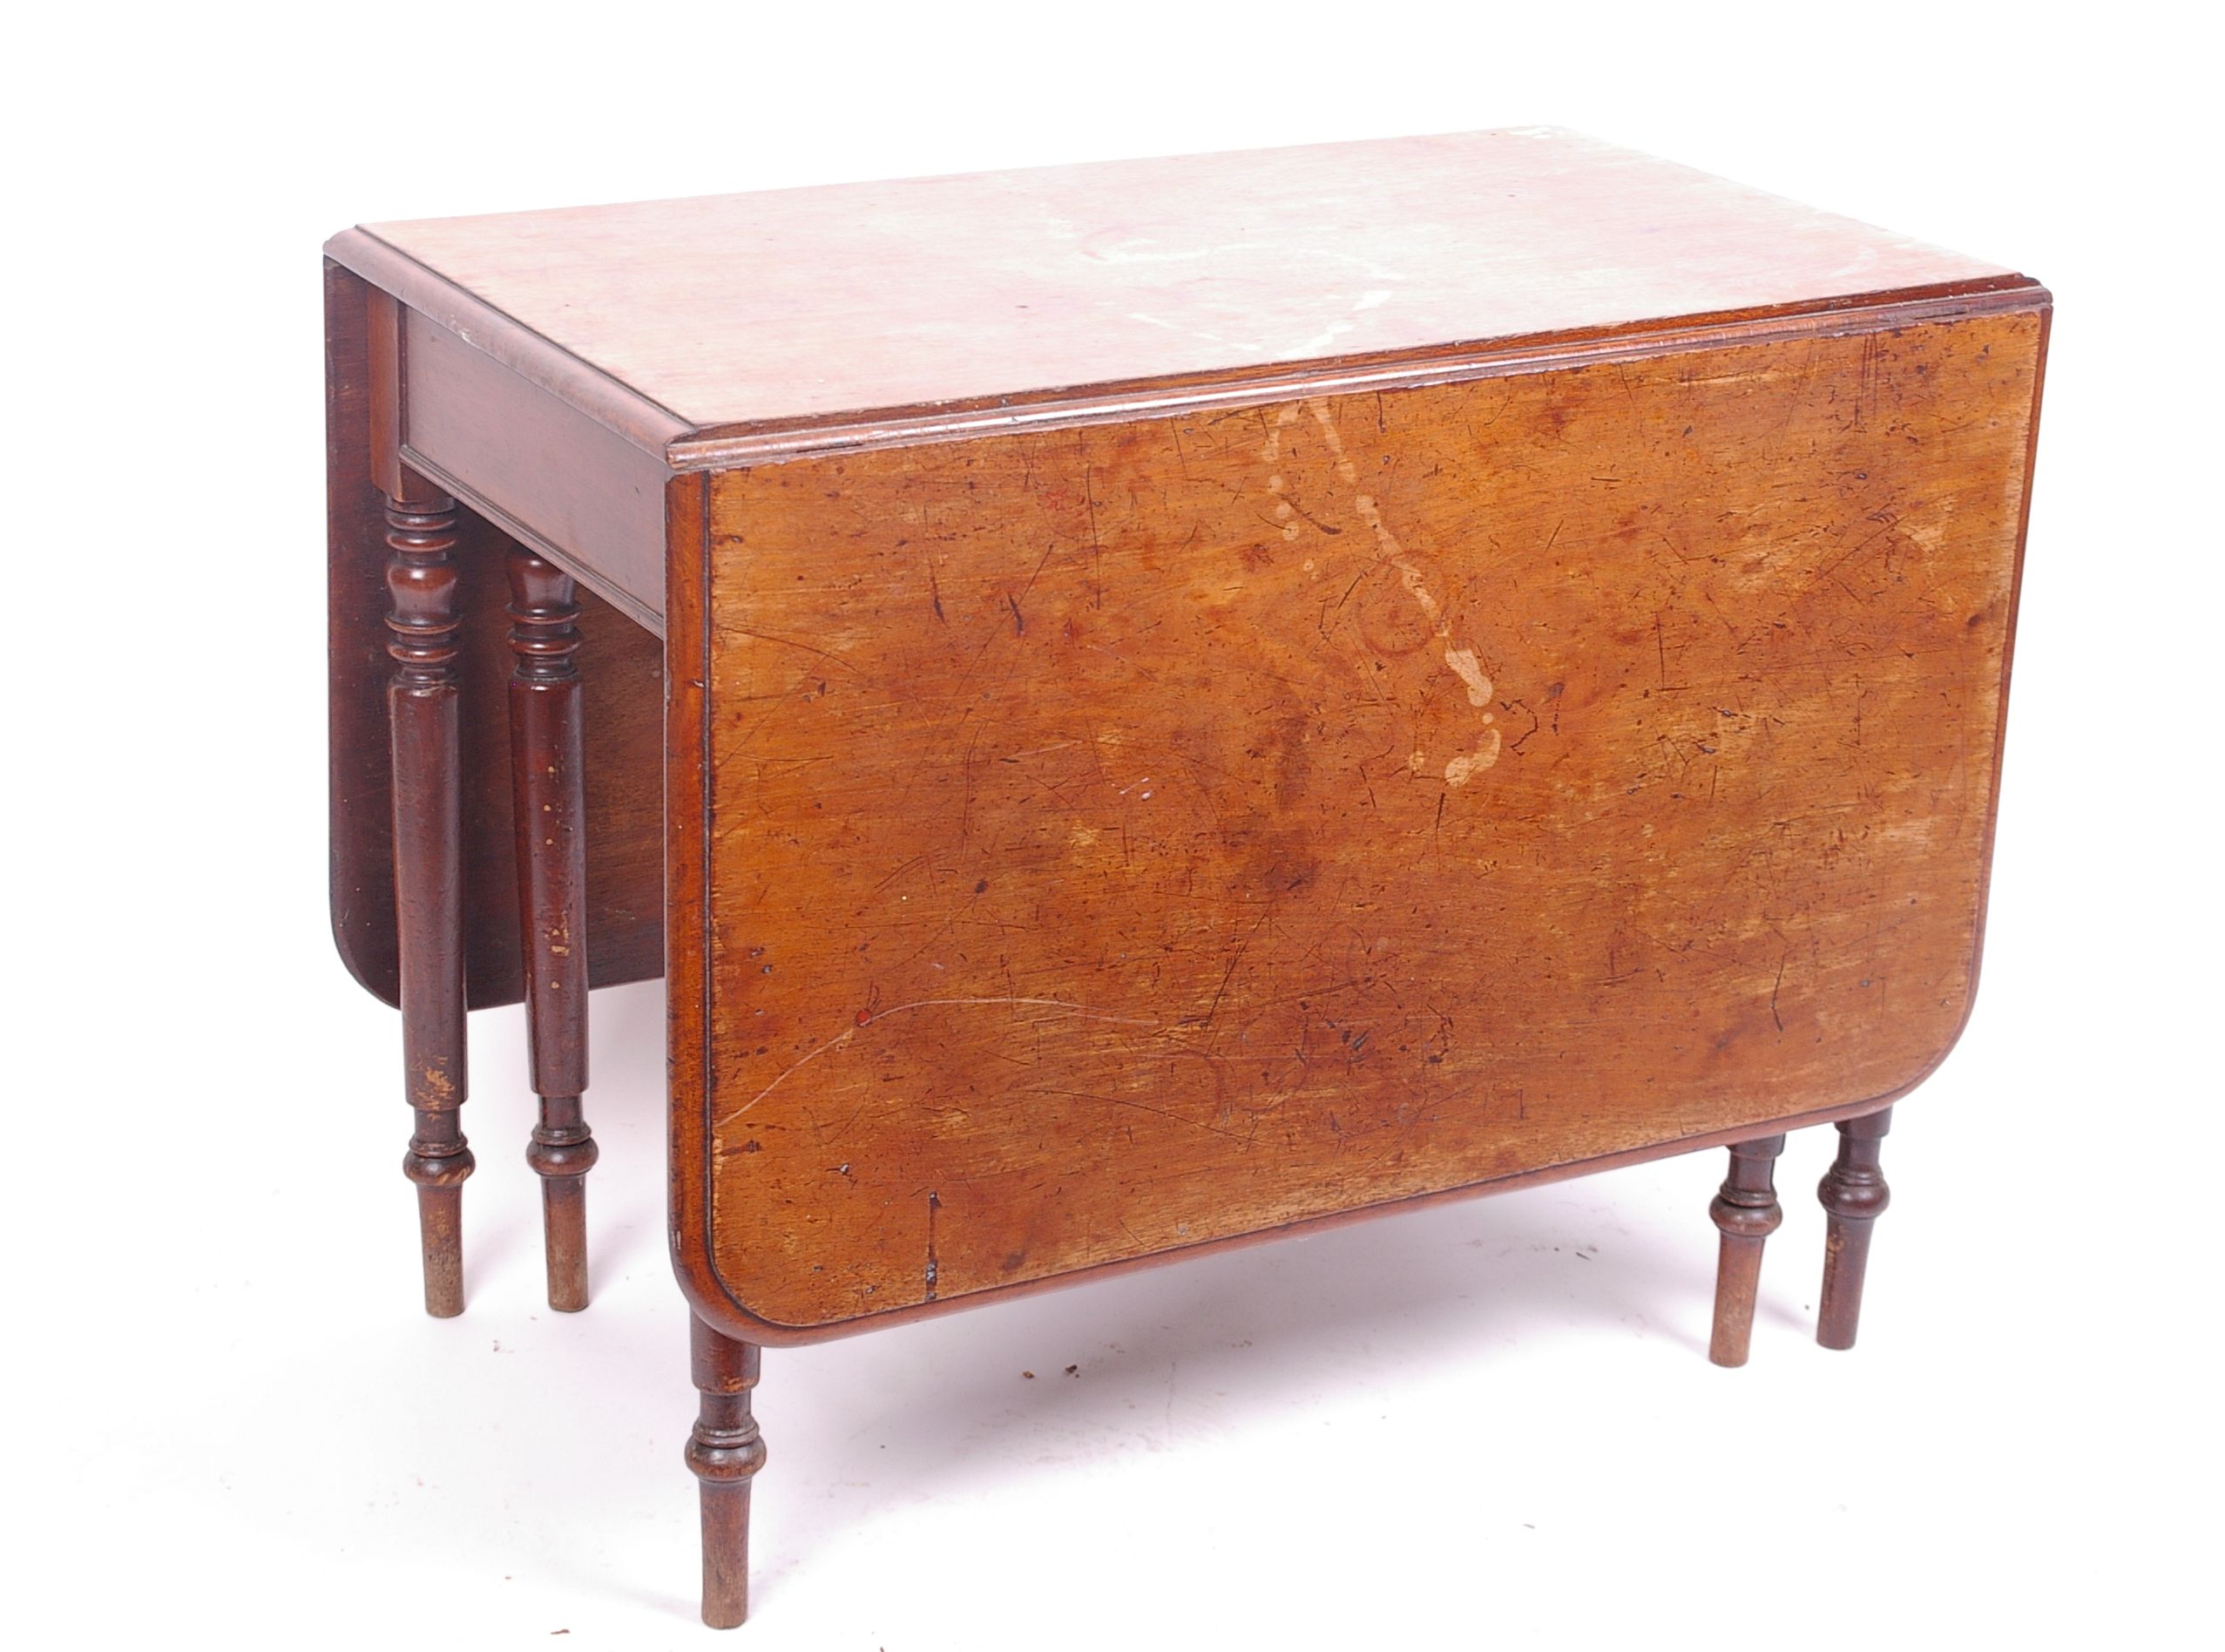 A 19th Century mahogany drop leaf table on turned legs 73cm high, 90cm wide